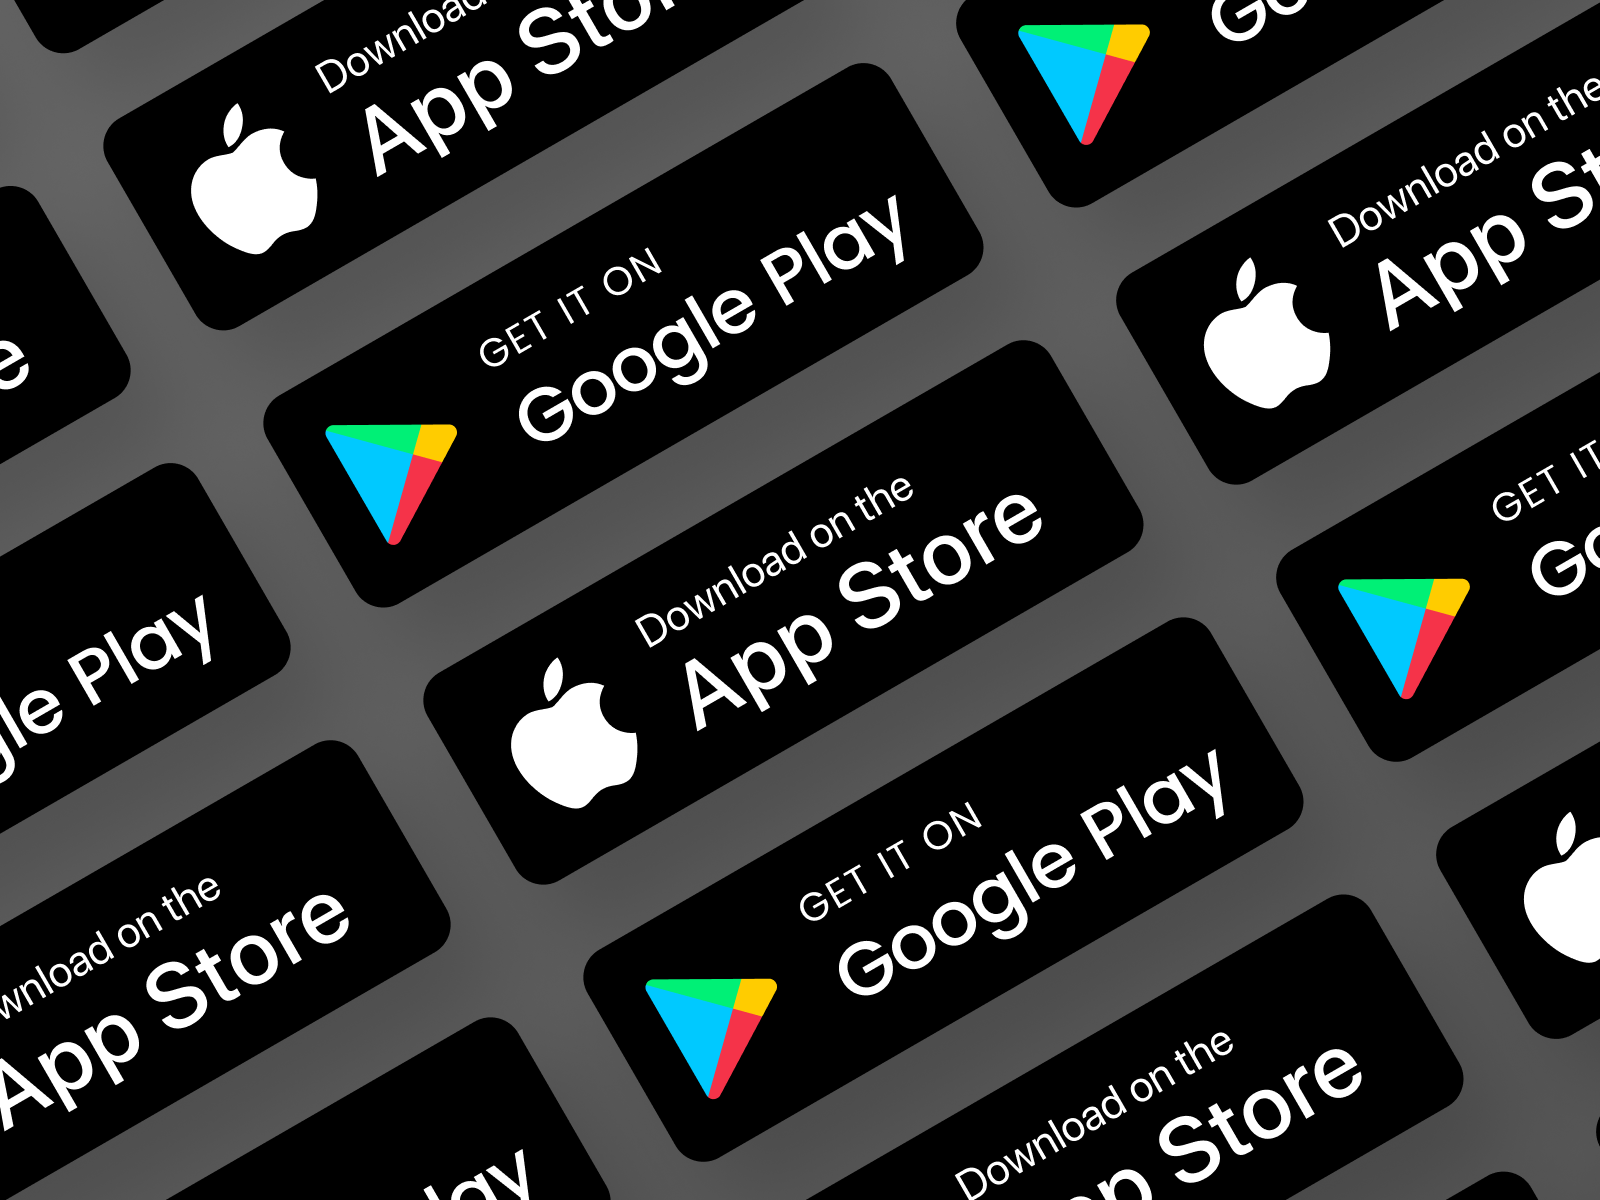 Using app store. APPSTORE приложения. Магазин приложений Apple. Гугл плей и апстор. App Store Google Play.